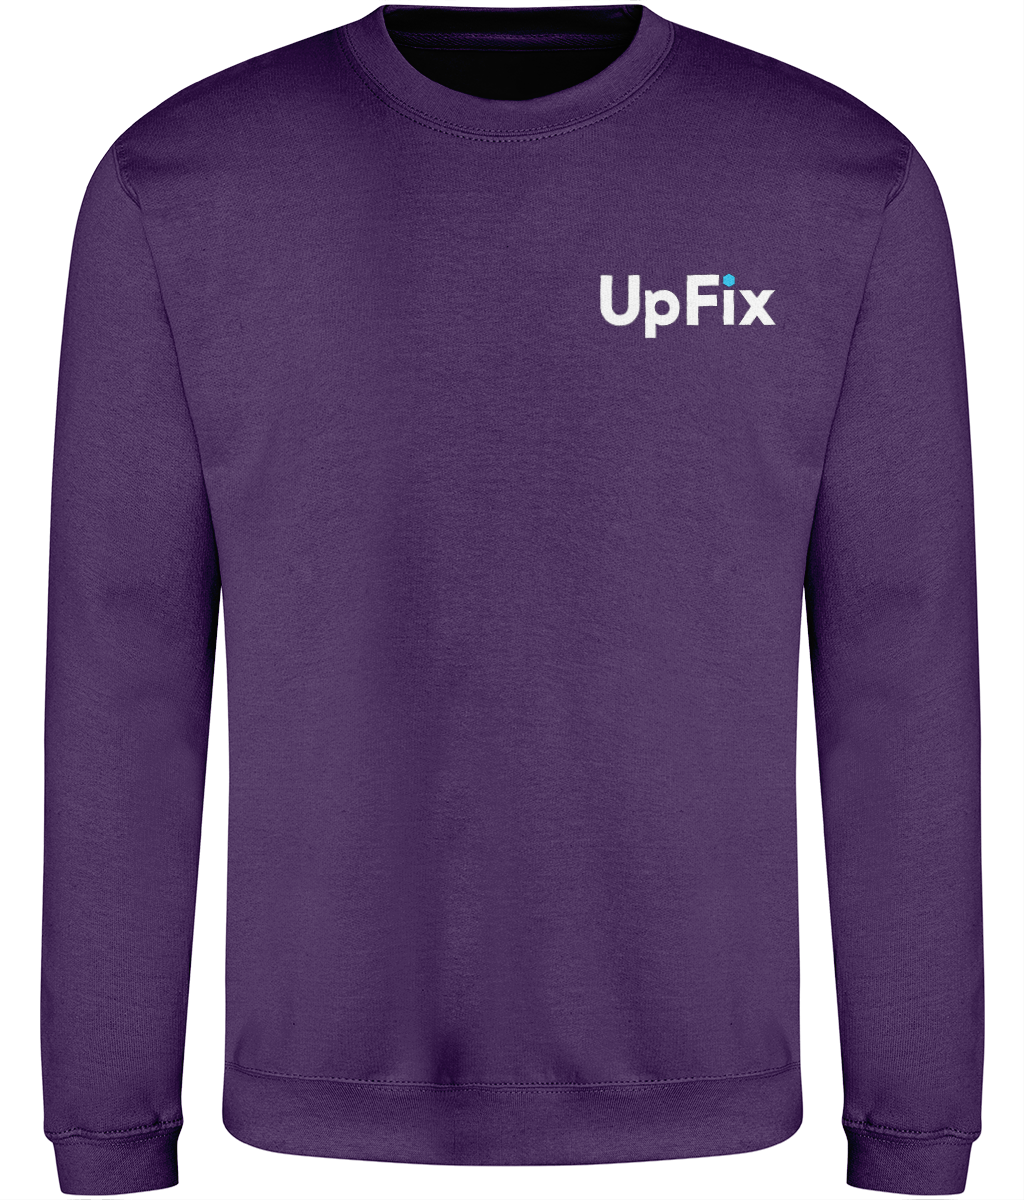 Upfix - Branded sweatshirt